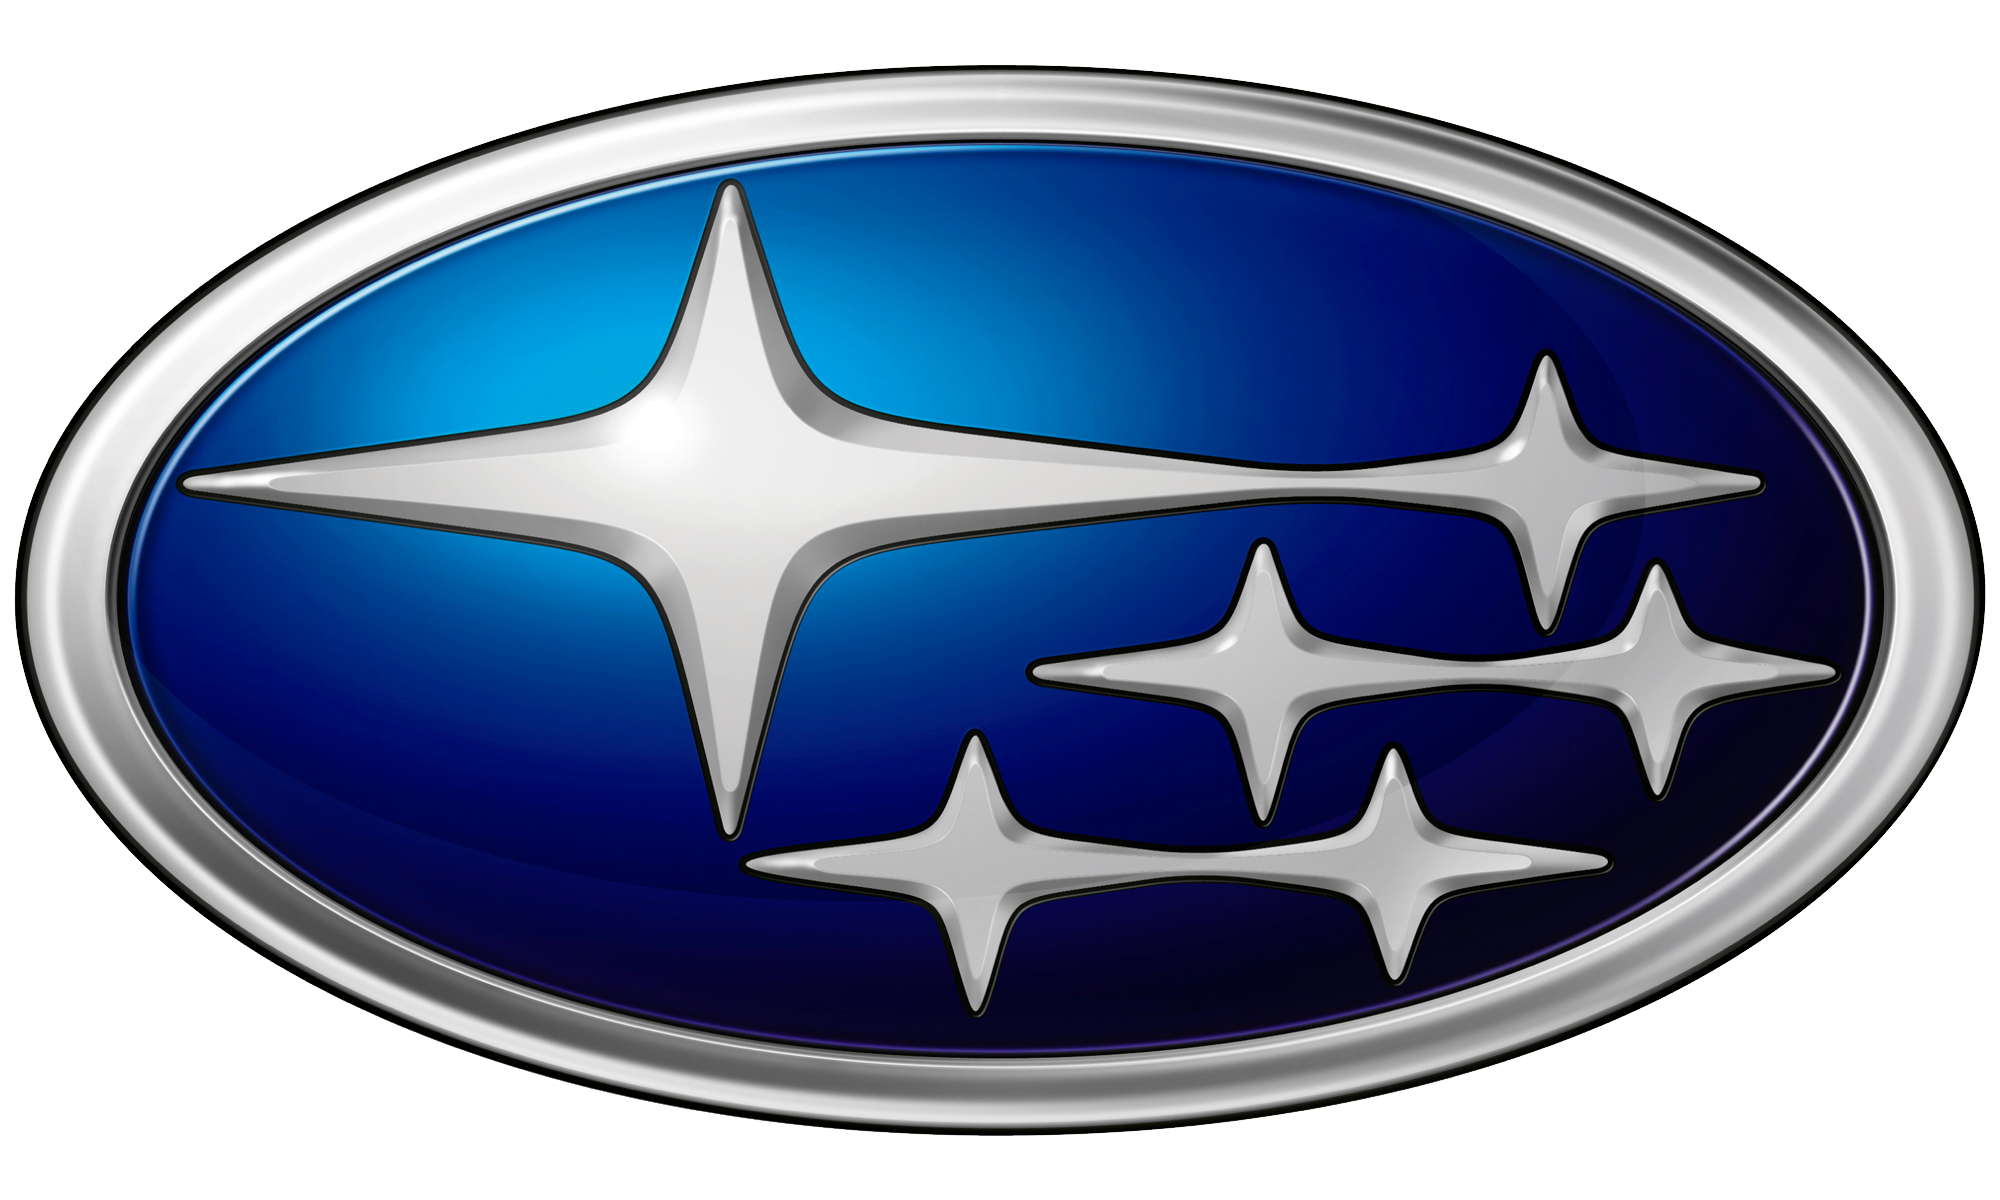 Subaru: From Aircraft to Racing